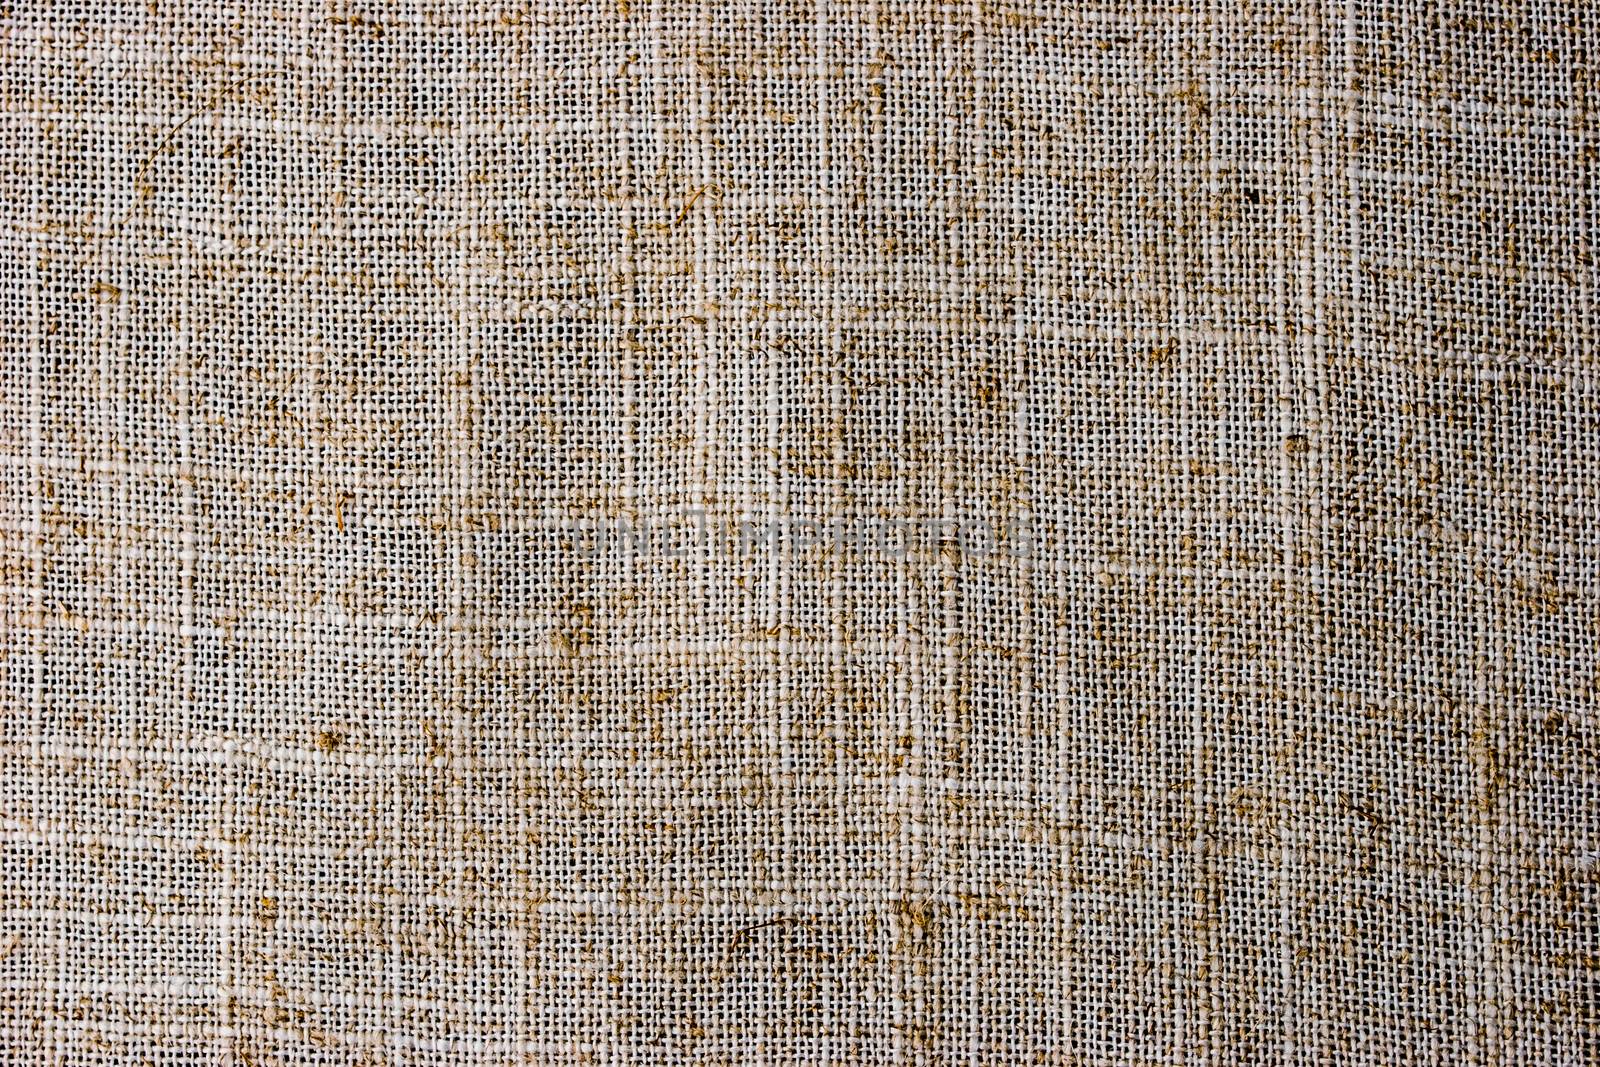 Natural flax napkin background close-up by Deniskarpenkov